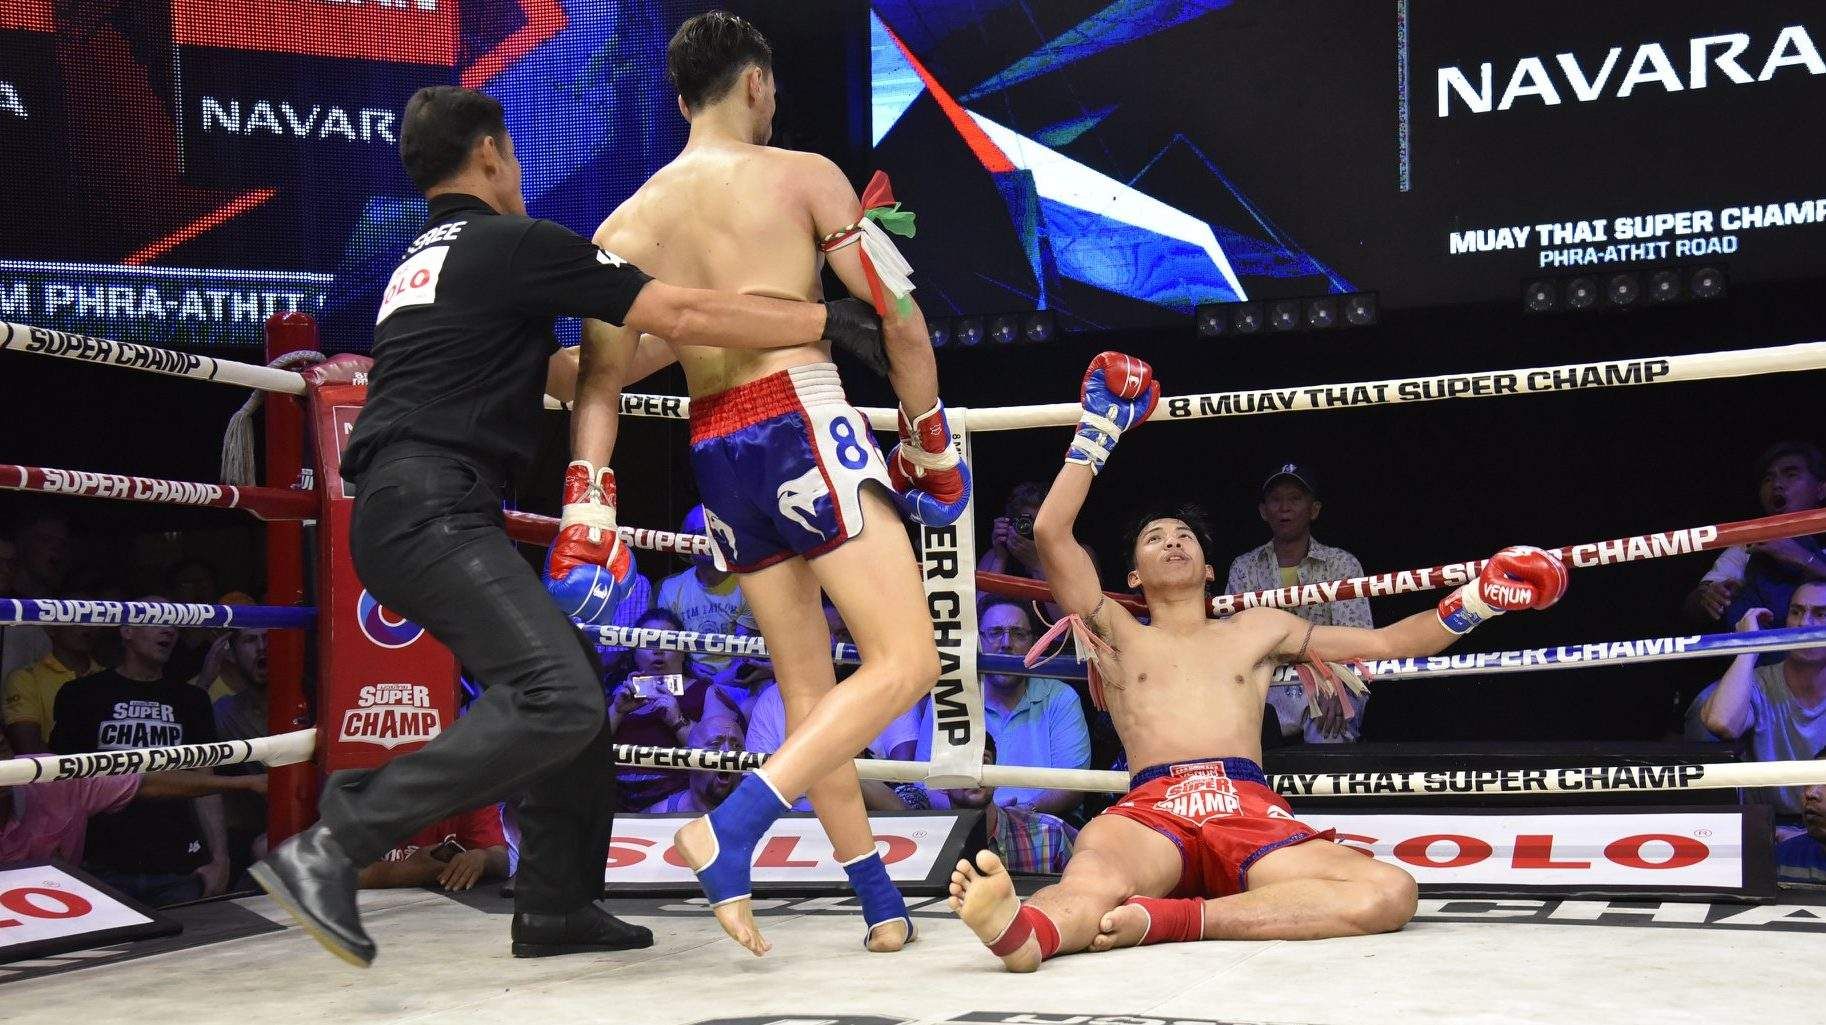 Нокаут года: в тайском боксе хозяина ринга "отключили" одним ударом колена в голову – видео